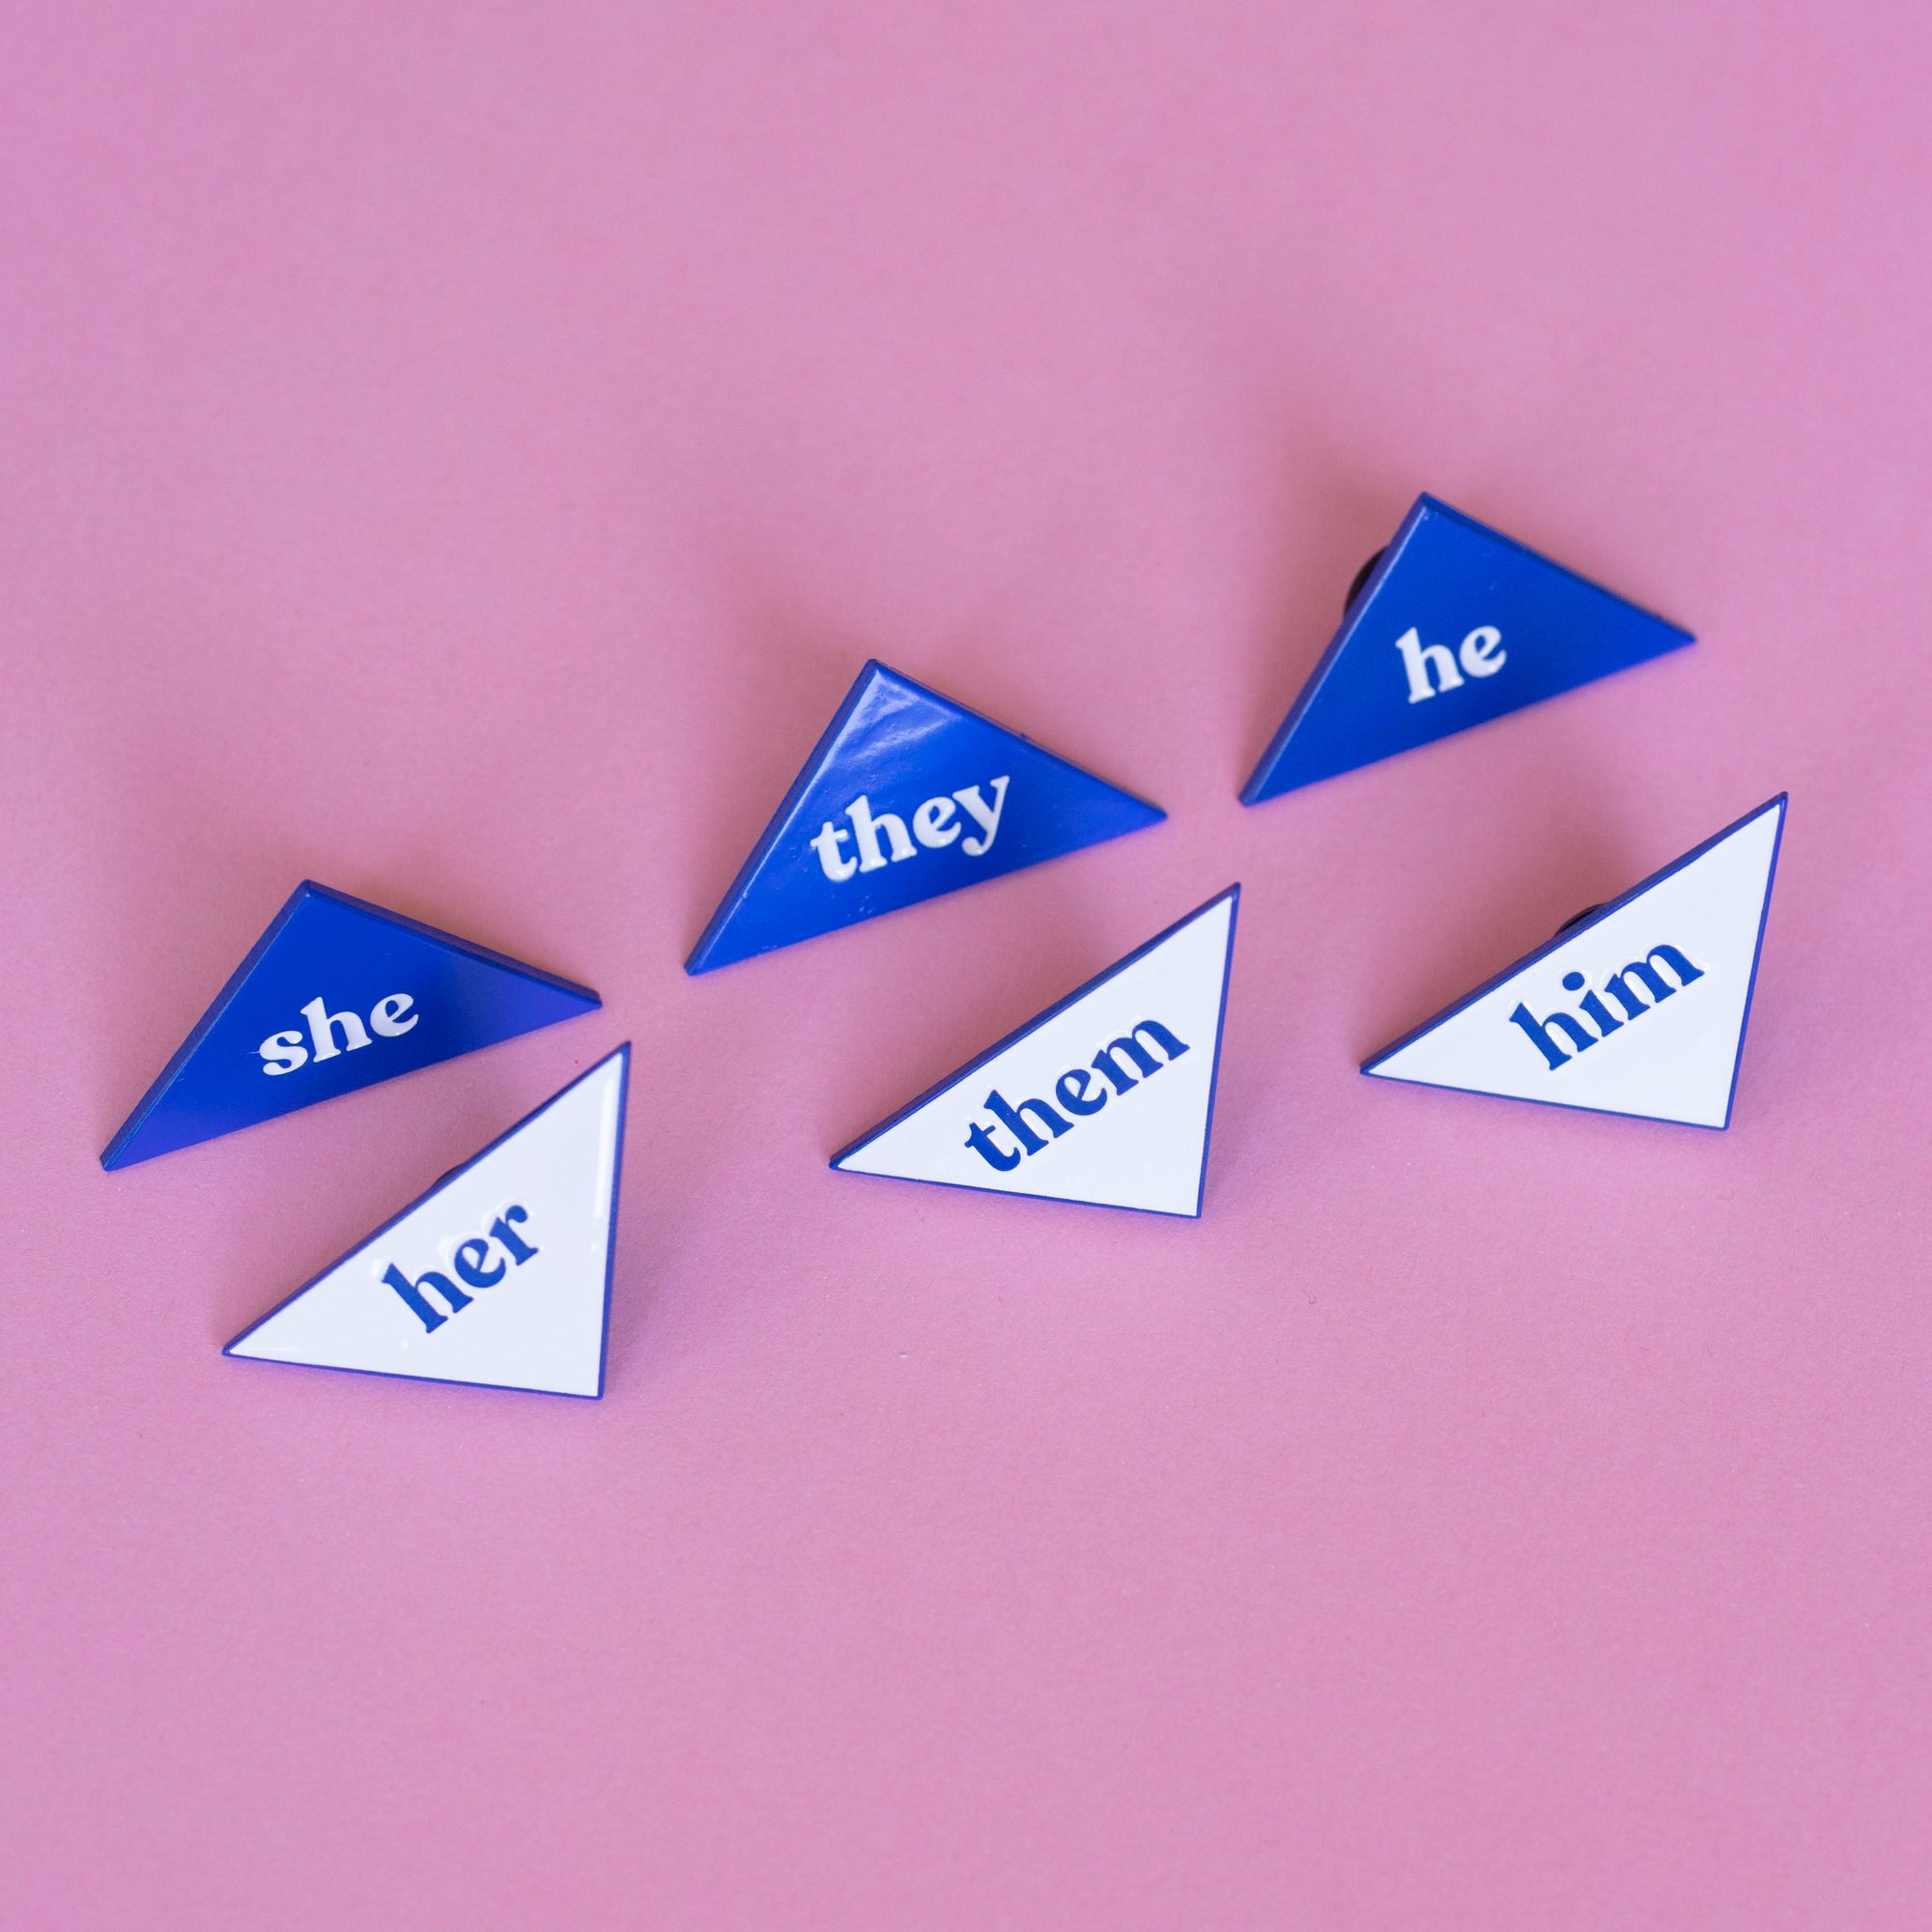 He - Pronouns Combo Enamel Pins - Blue - Top